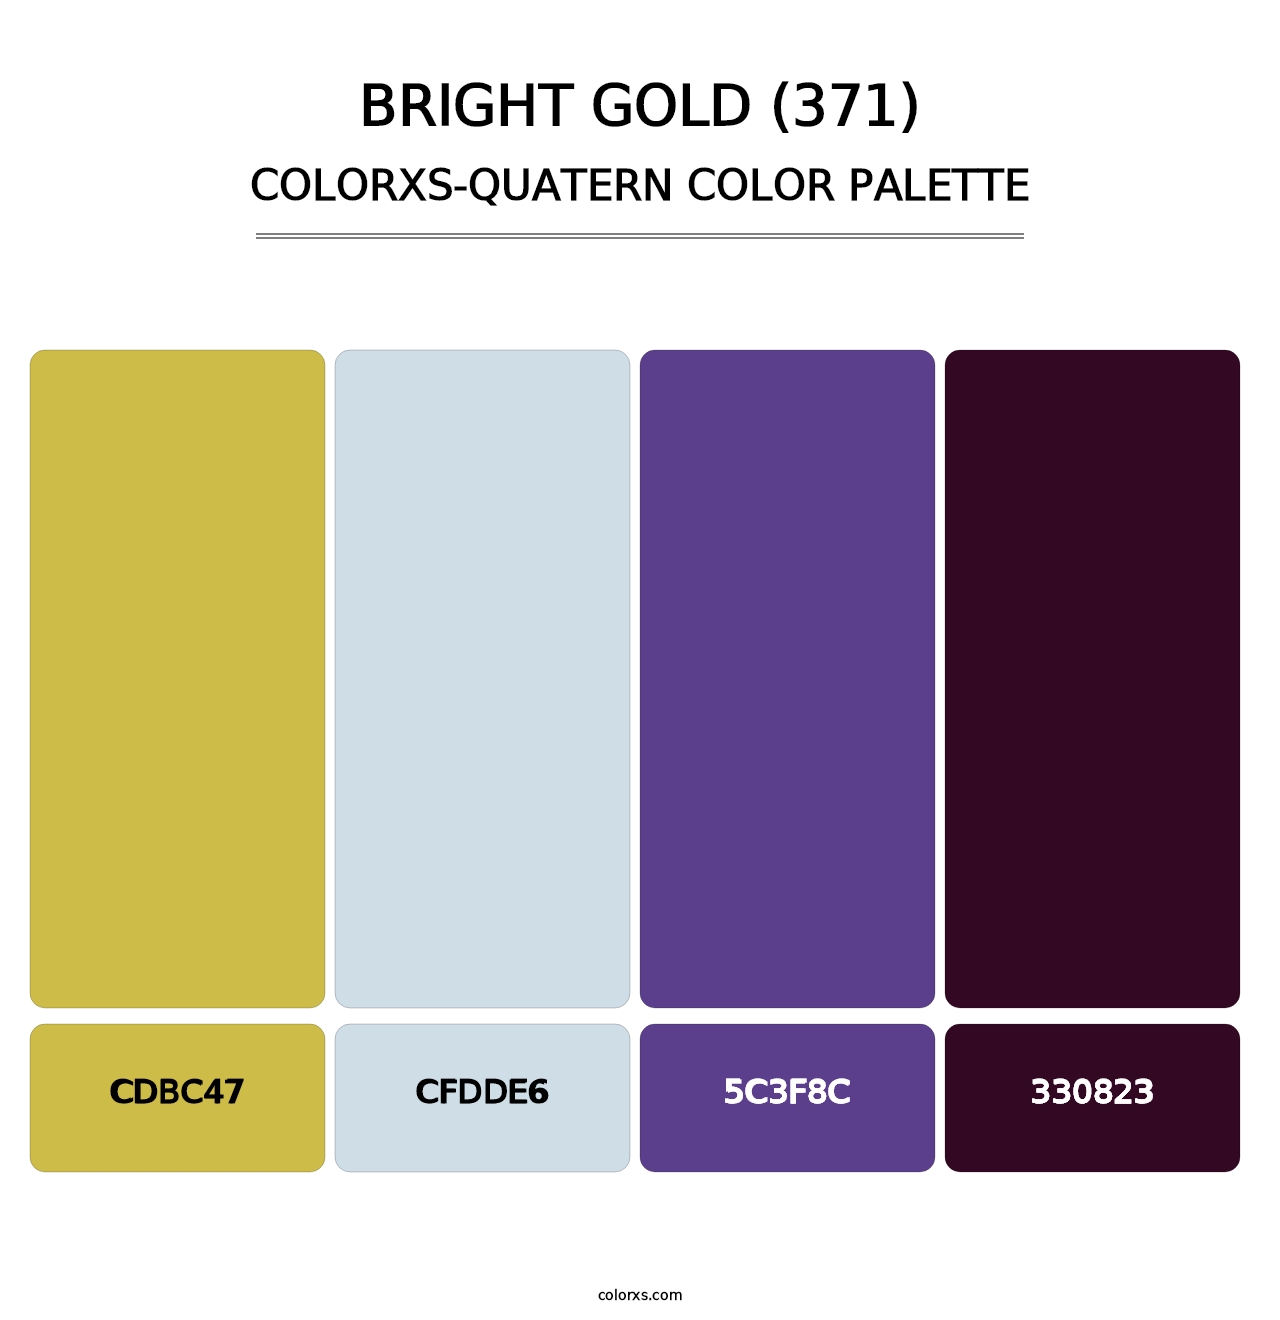 Bright Gold (371) - Colorxs Quatern Palette